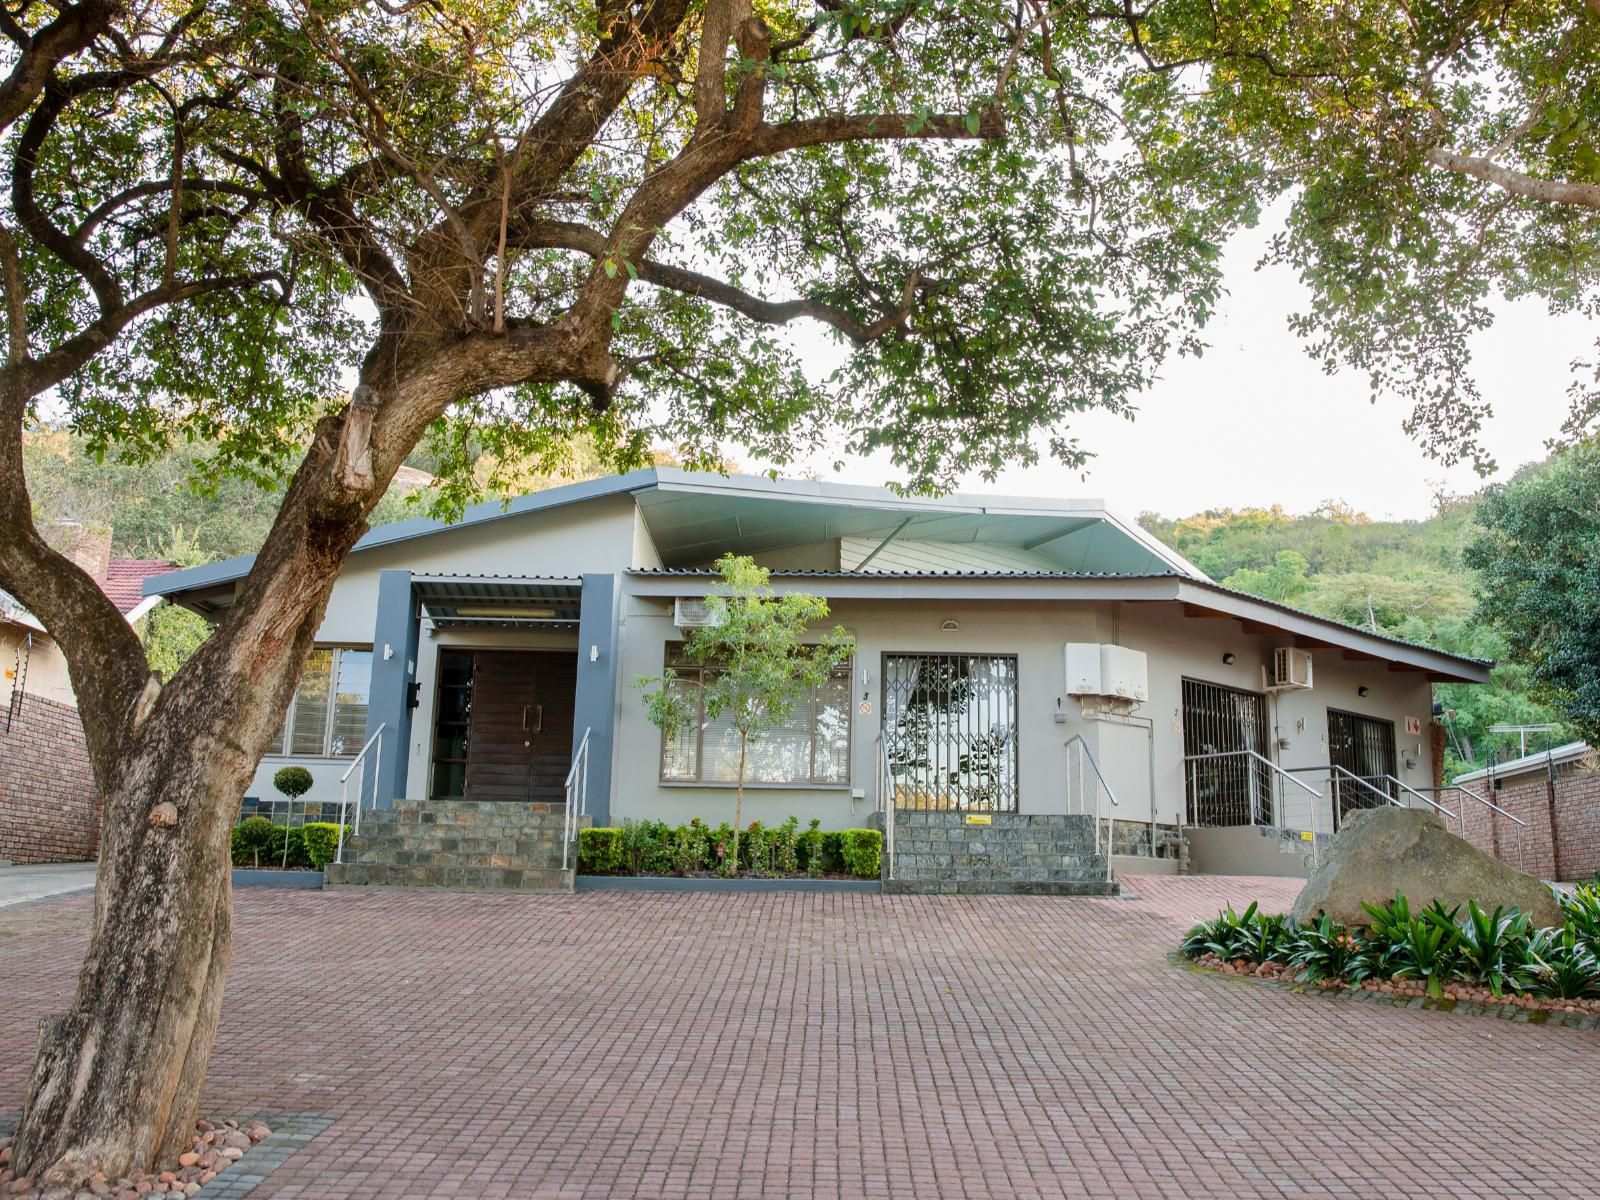 85 Ehmke Nelspruit Mpumalanga South Africa House, Building, Architecture, Palm Tree, Plant, Nature, Wood